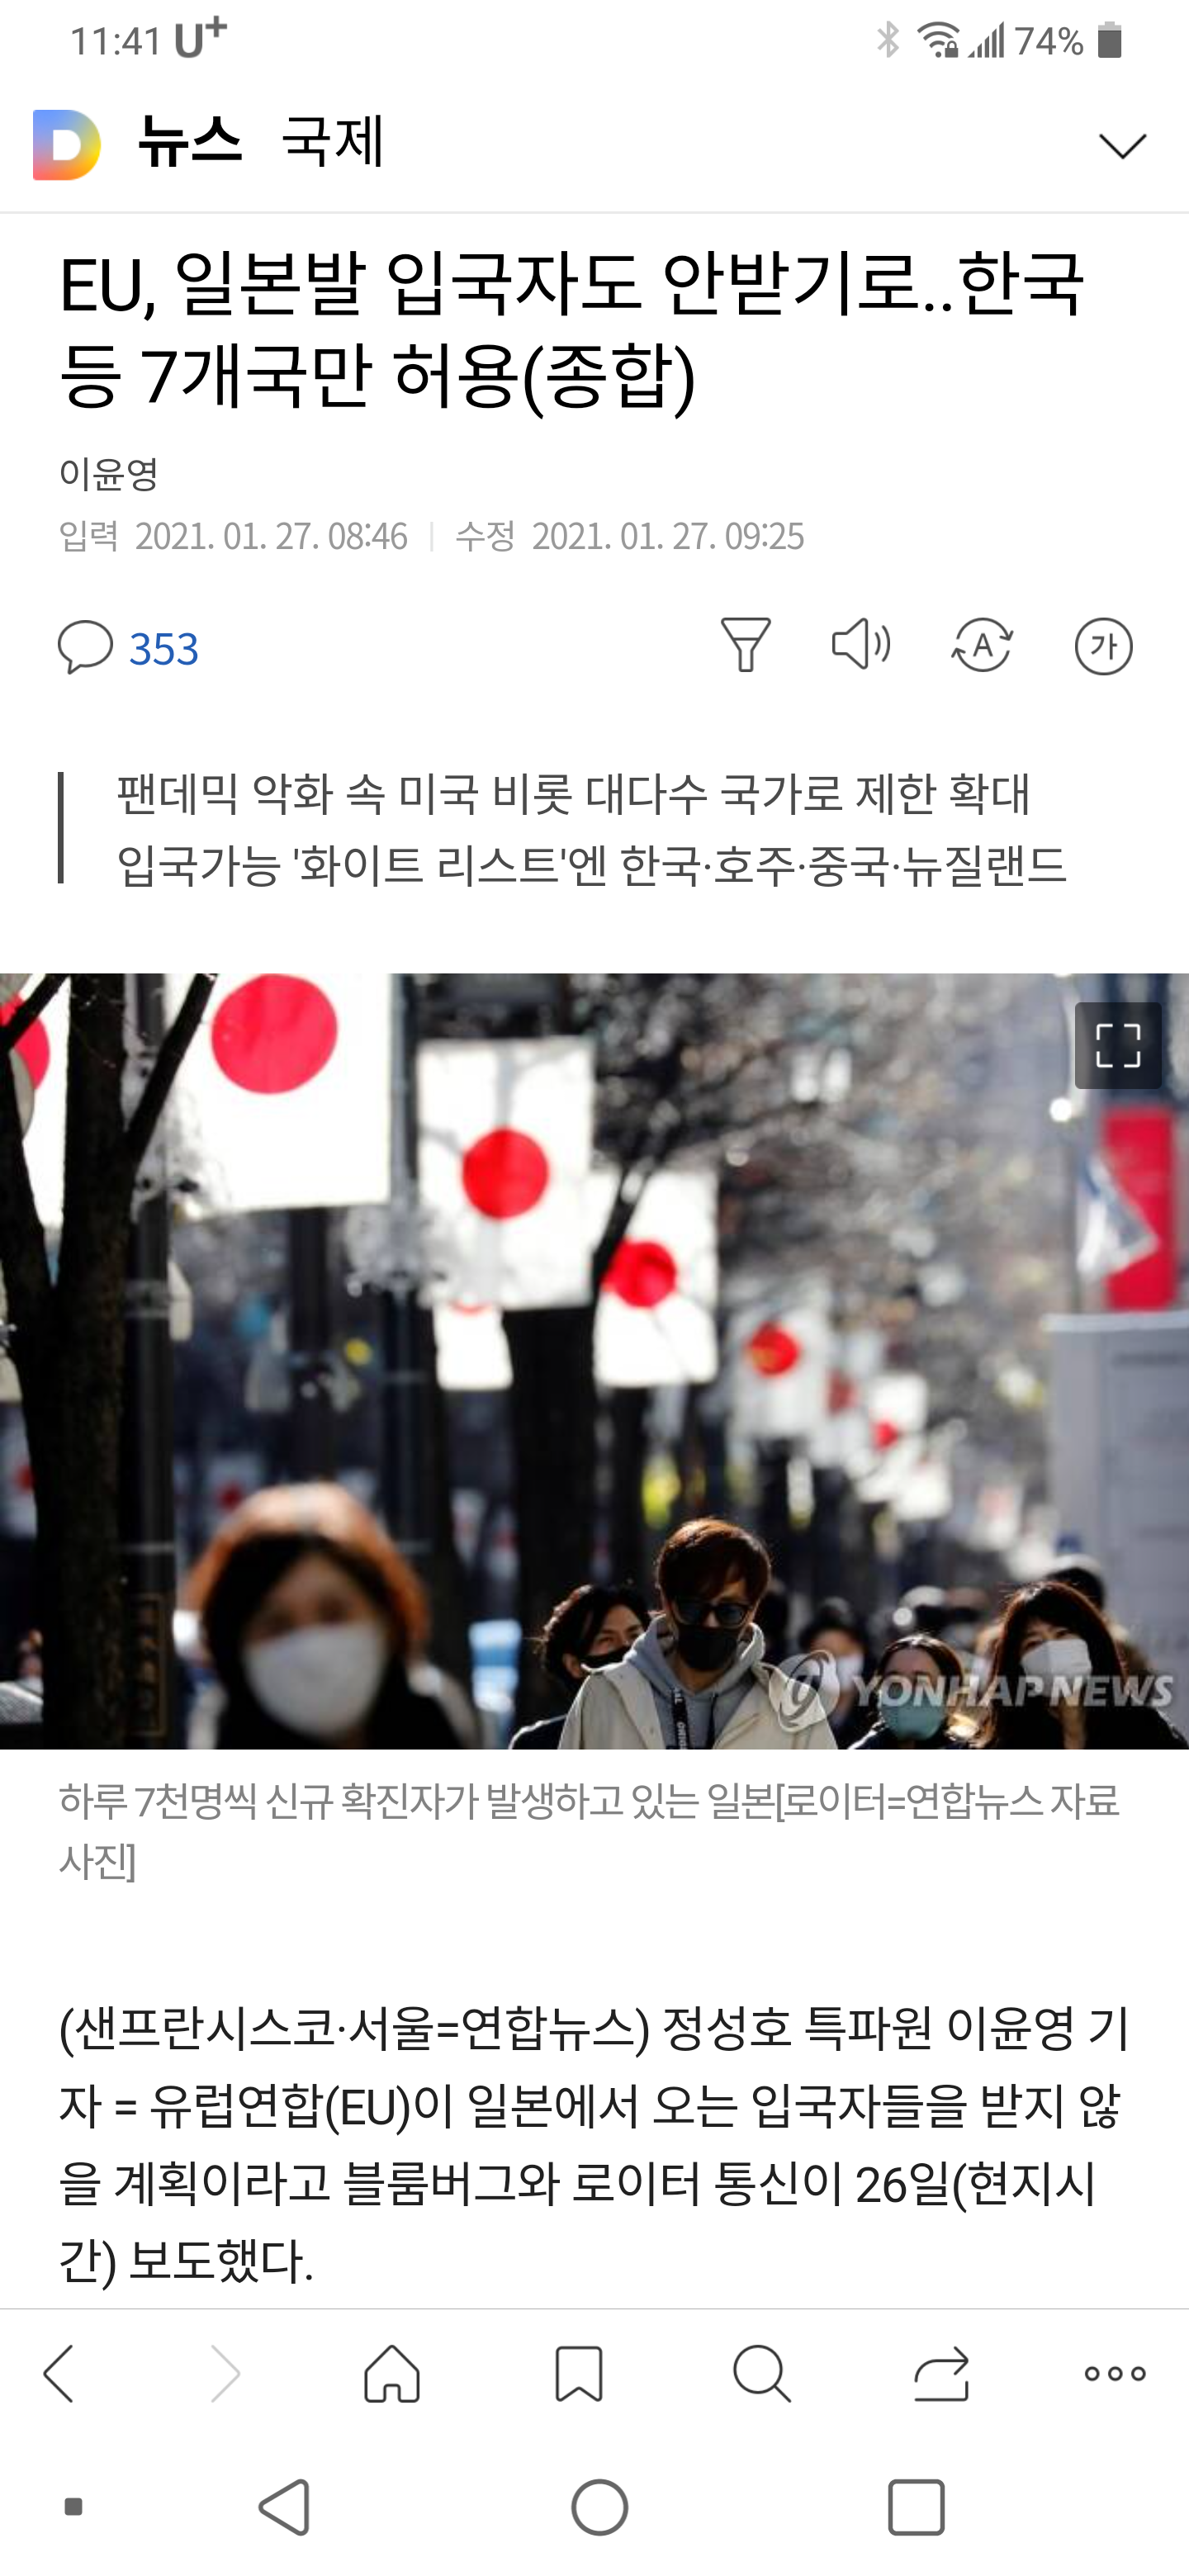 EU, 일본은 안되고 한국등 7개국만 입국 허용